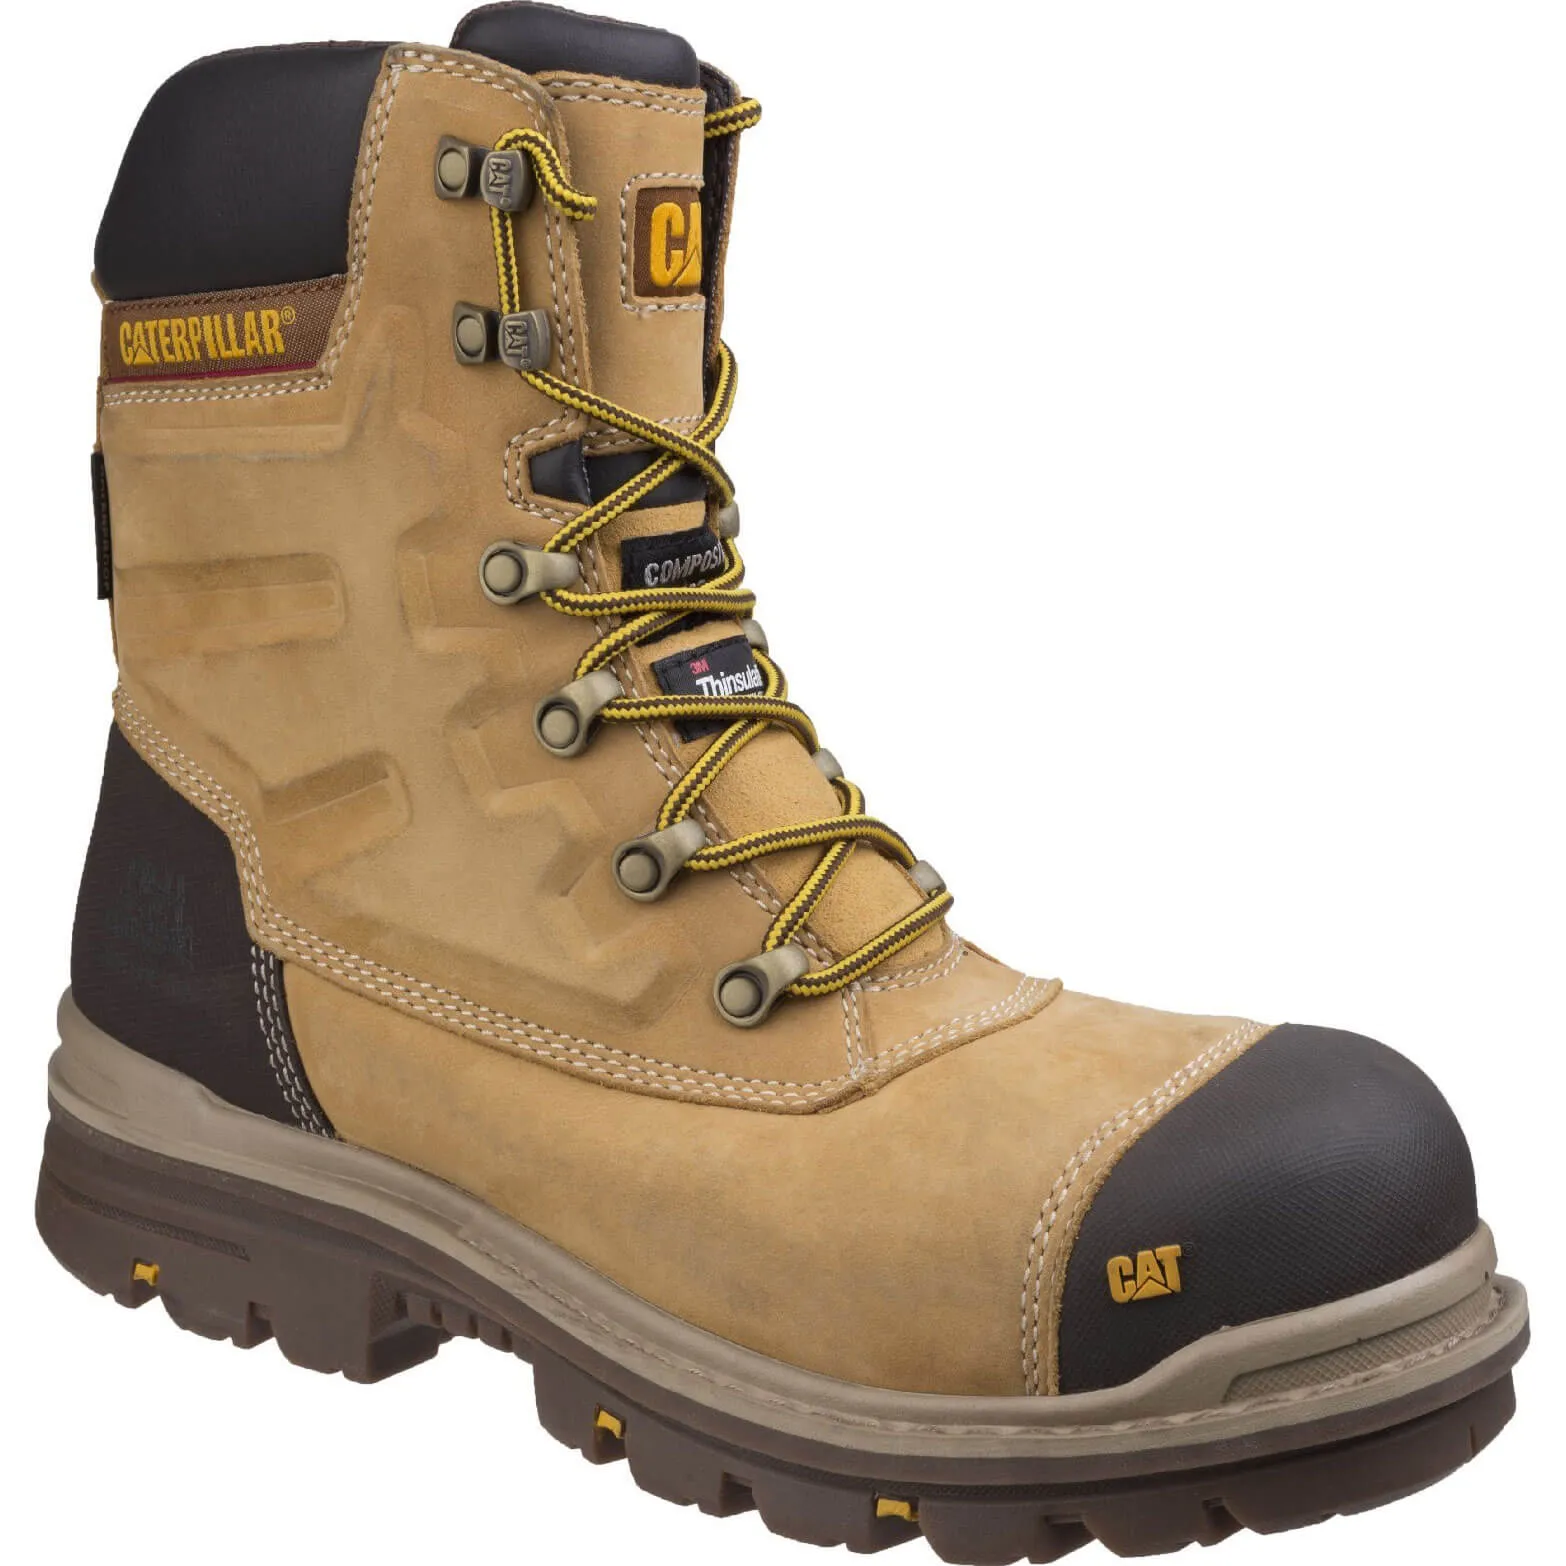 Caterpillar Mens Premier Waterproof Safety Boots - Honey, Size 10